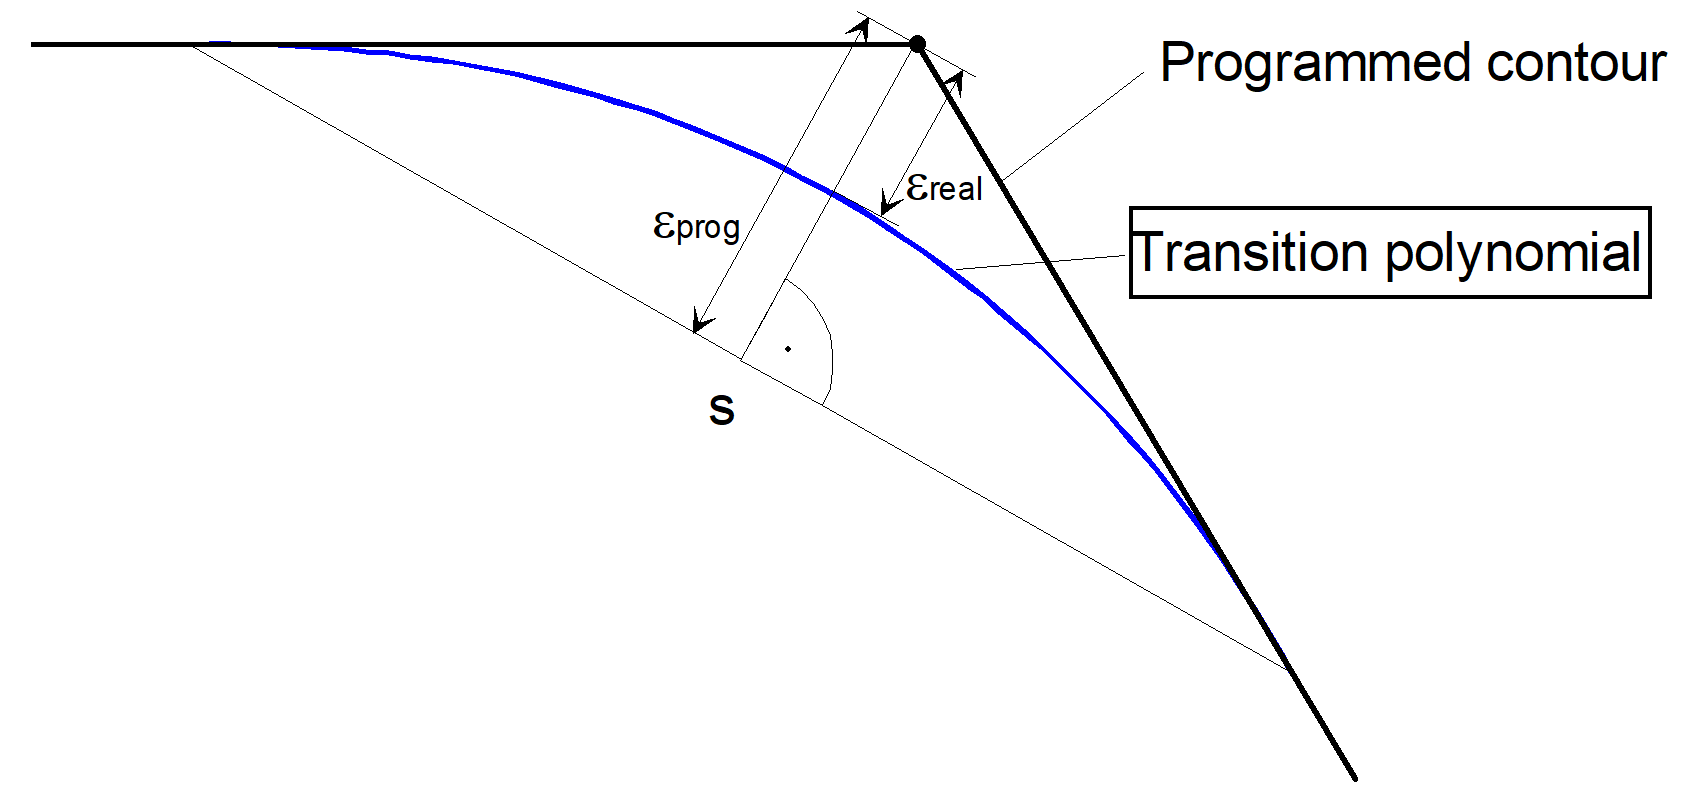 Insert transition polynomials